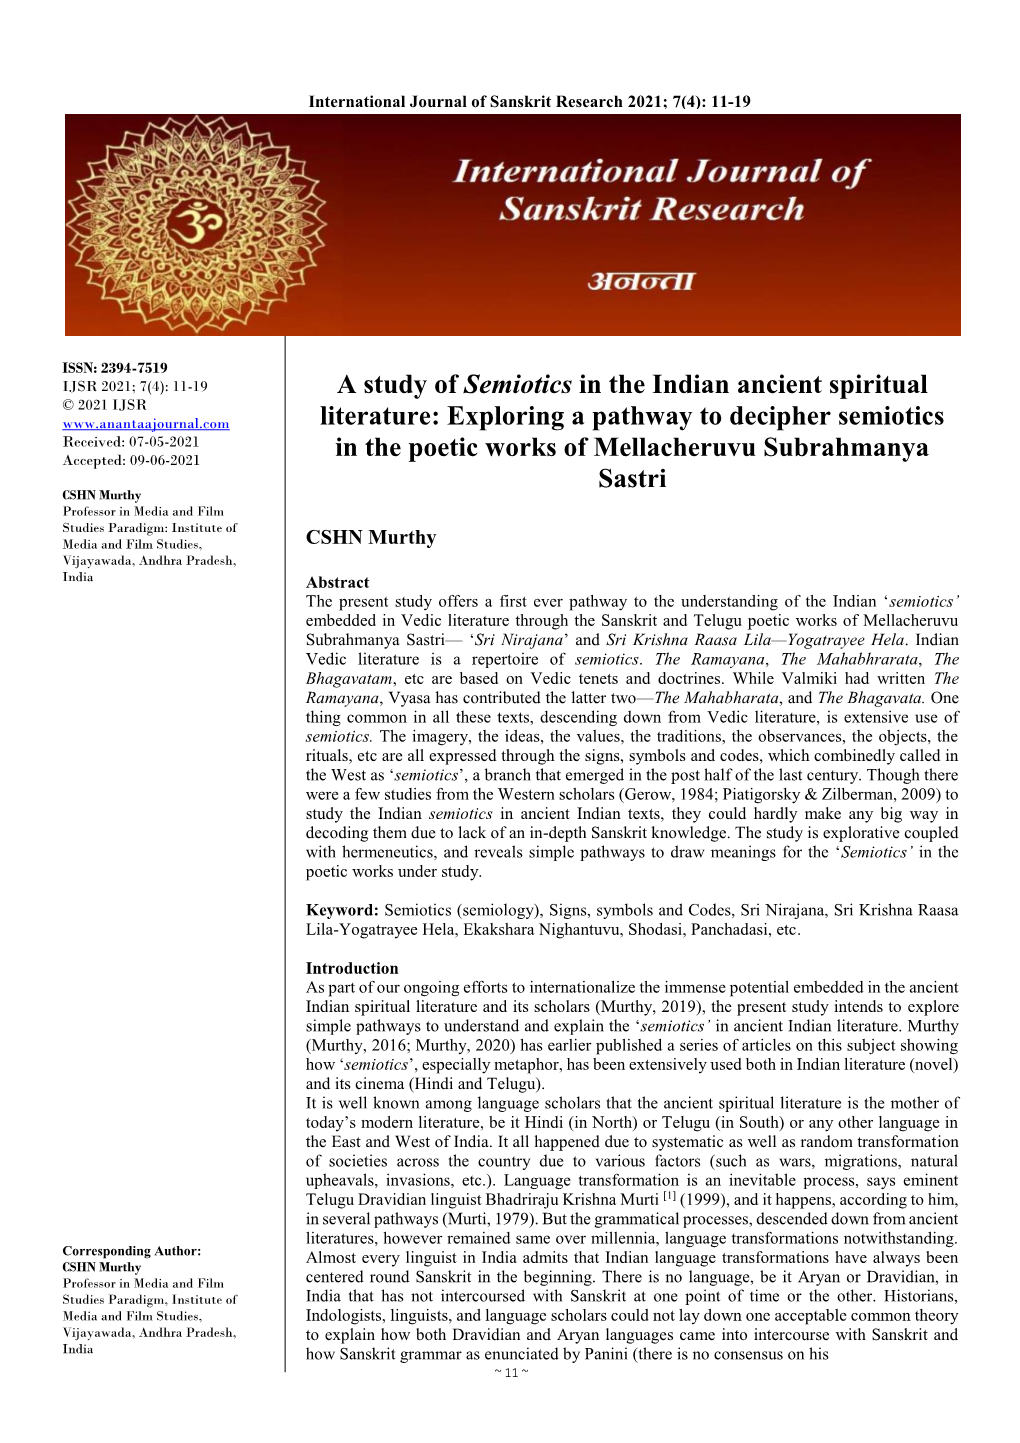 A Study of Semiotics in the Indian Ancient Spiritual Literature: Exploring